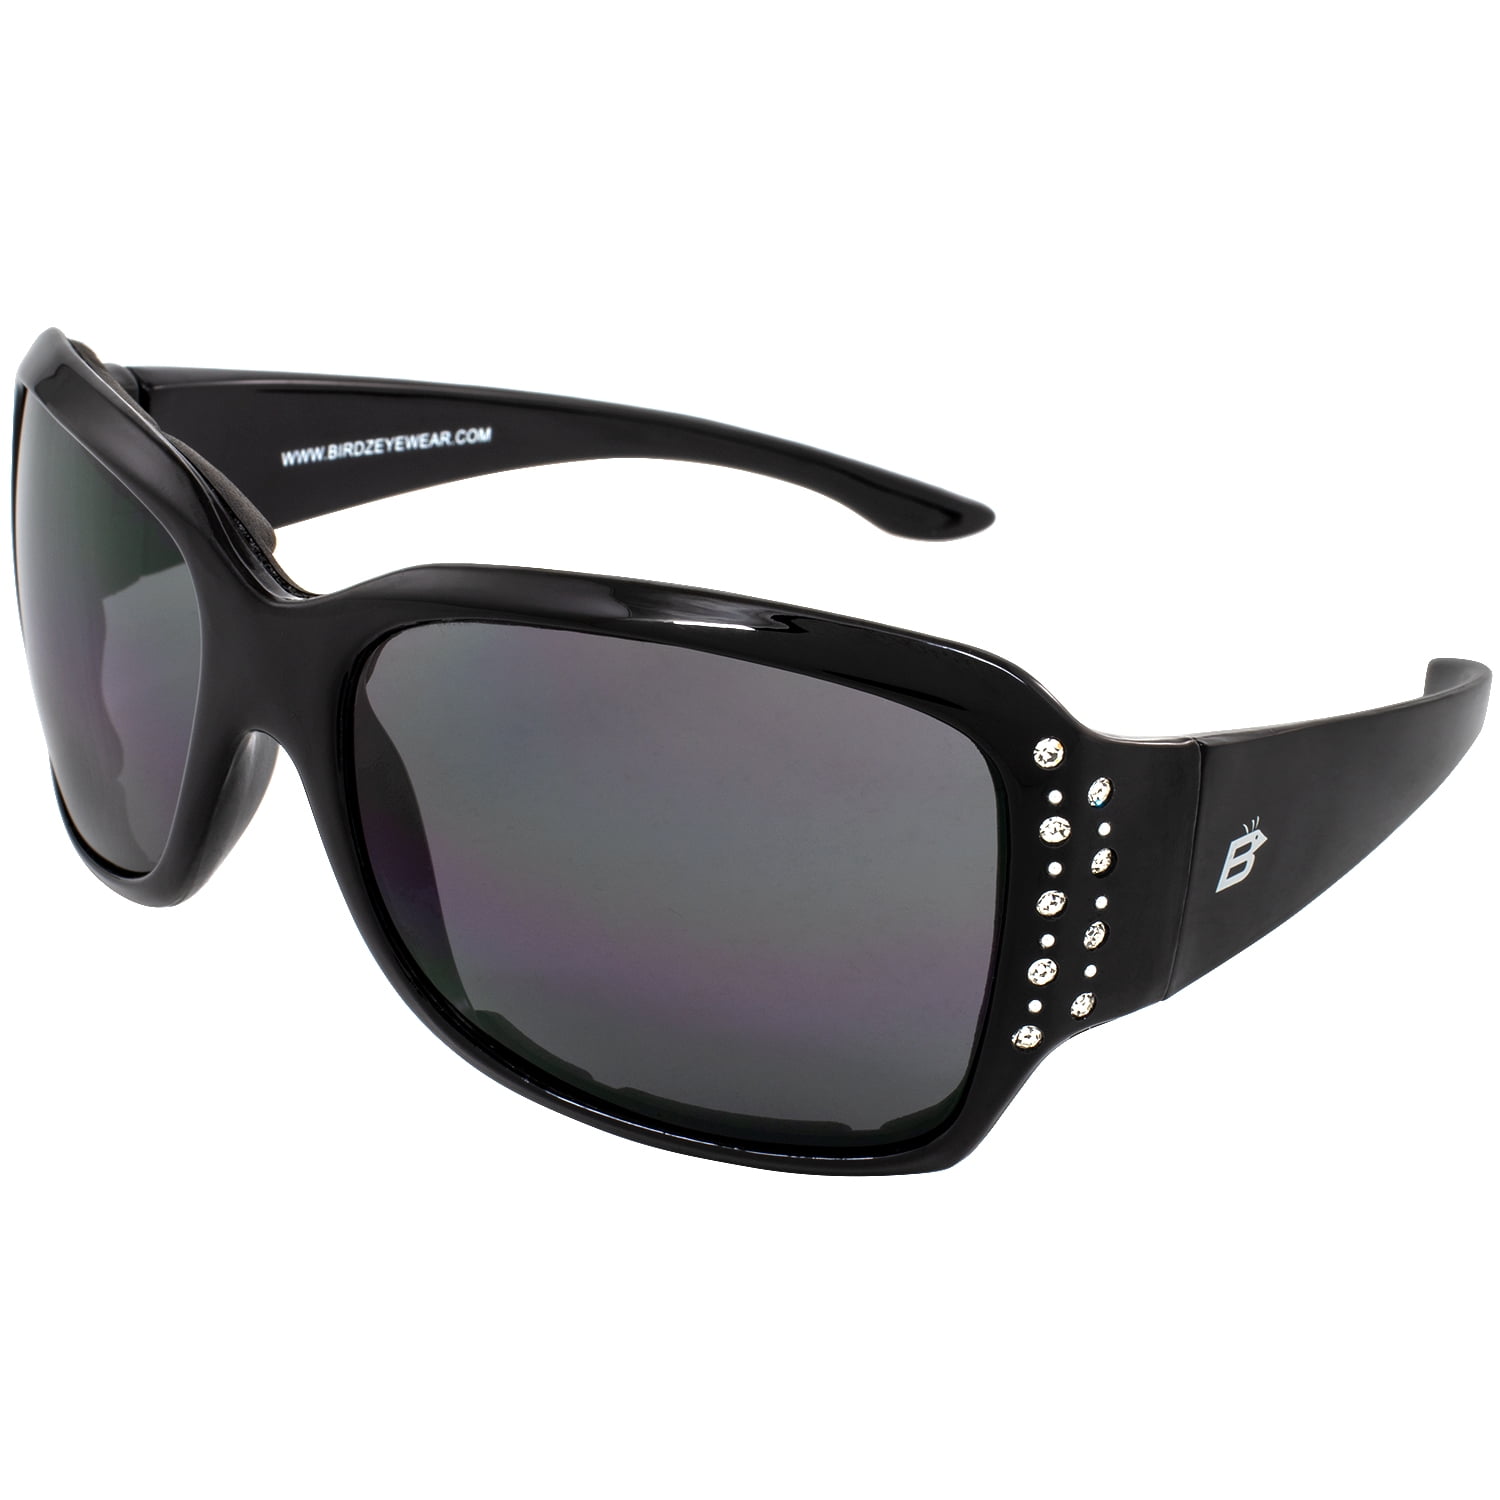 Birdz Eyewear Ladybird Womens Fashion Padded Motorcycle Sunglasses Riding Glasses W Rhinestones